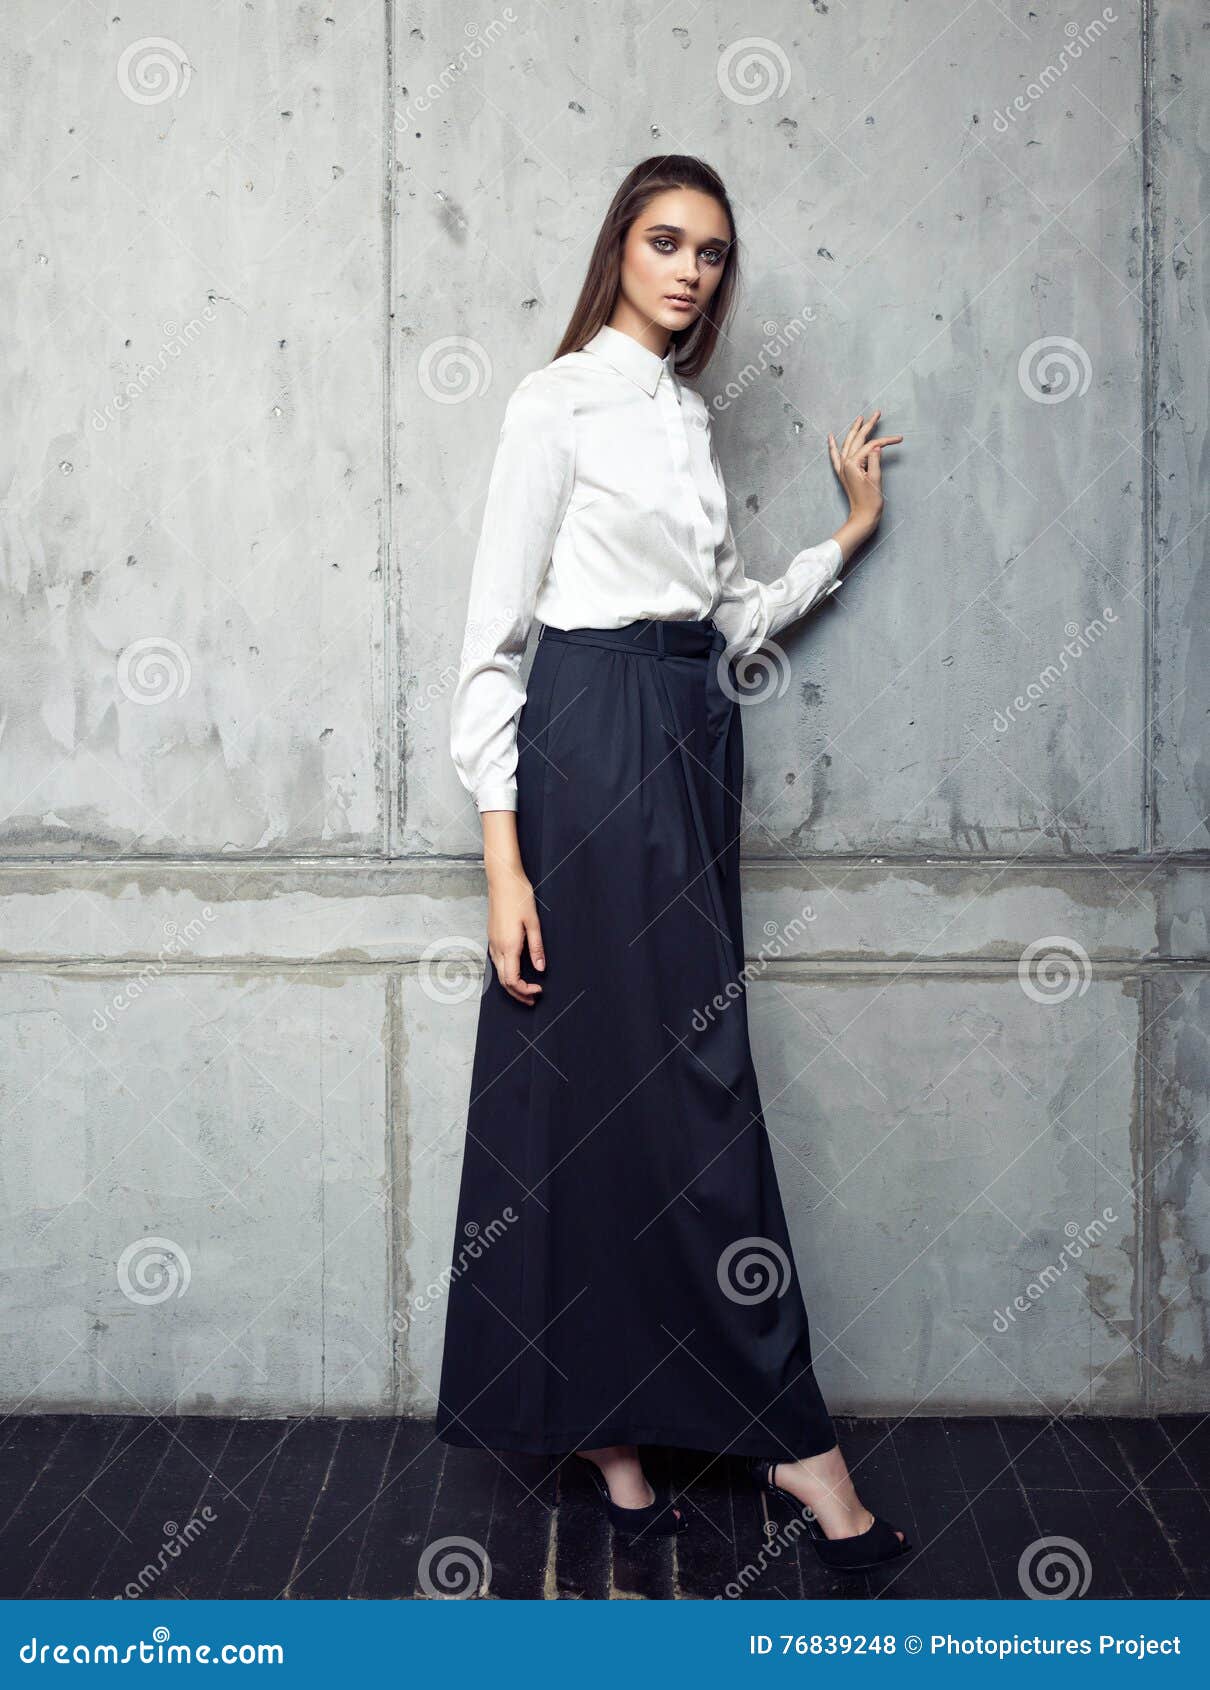 Fashion Model Wearing White Shirt and Long Black Skirt Posing in Studio  Stock Photo - Image of sensual, high: 76839248